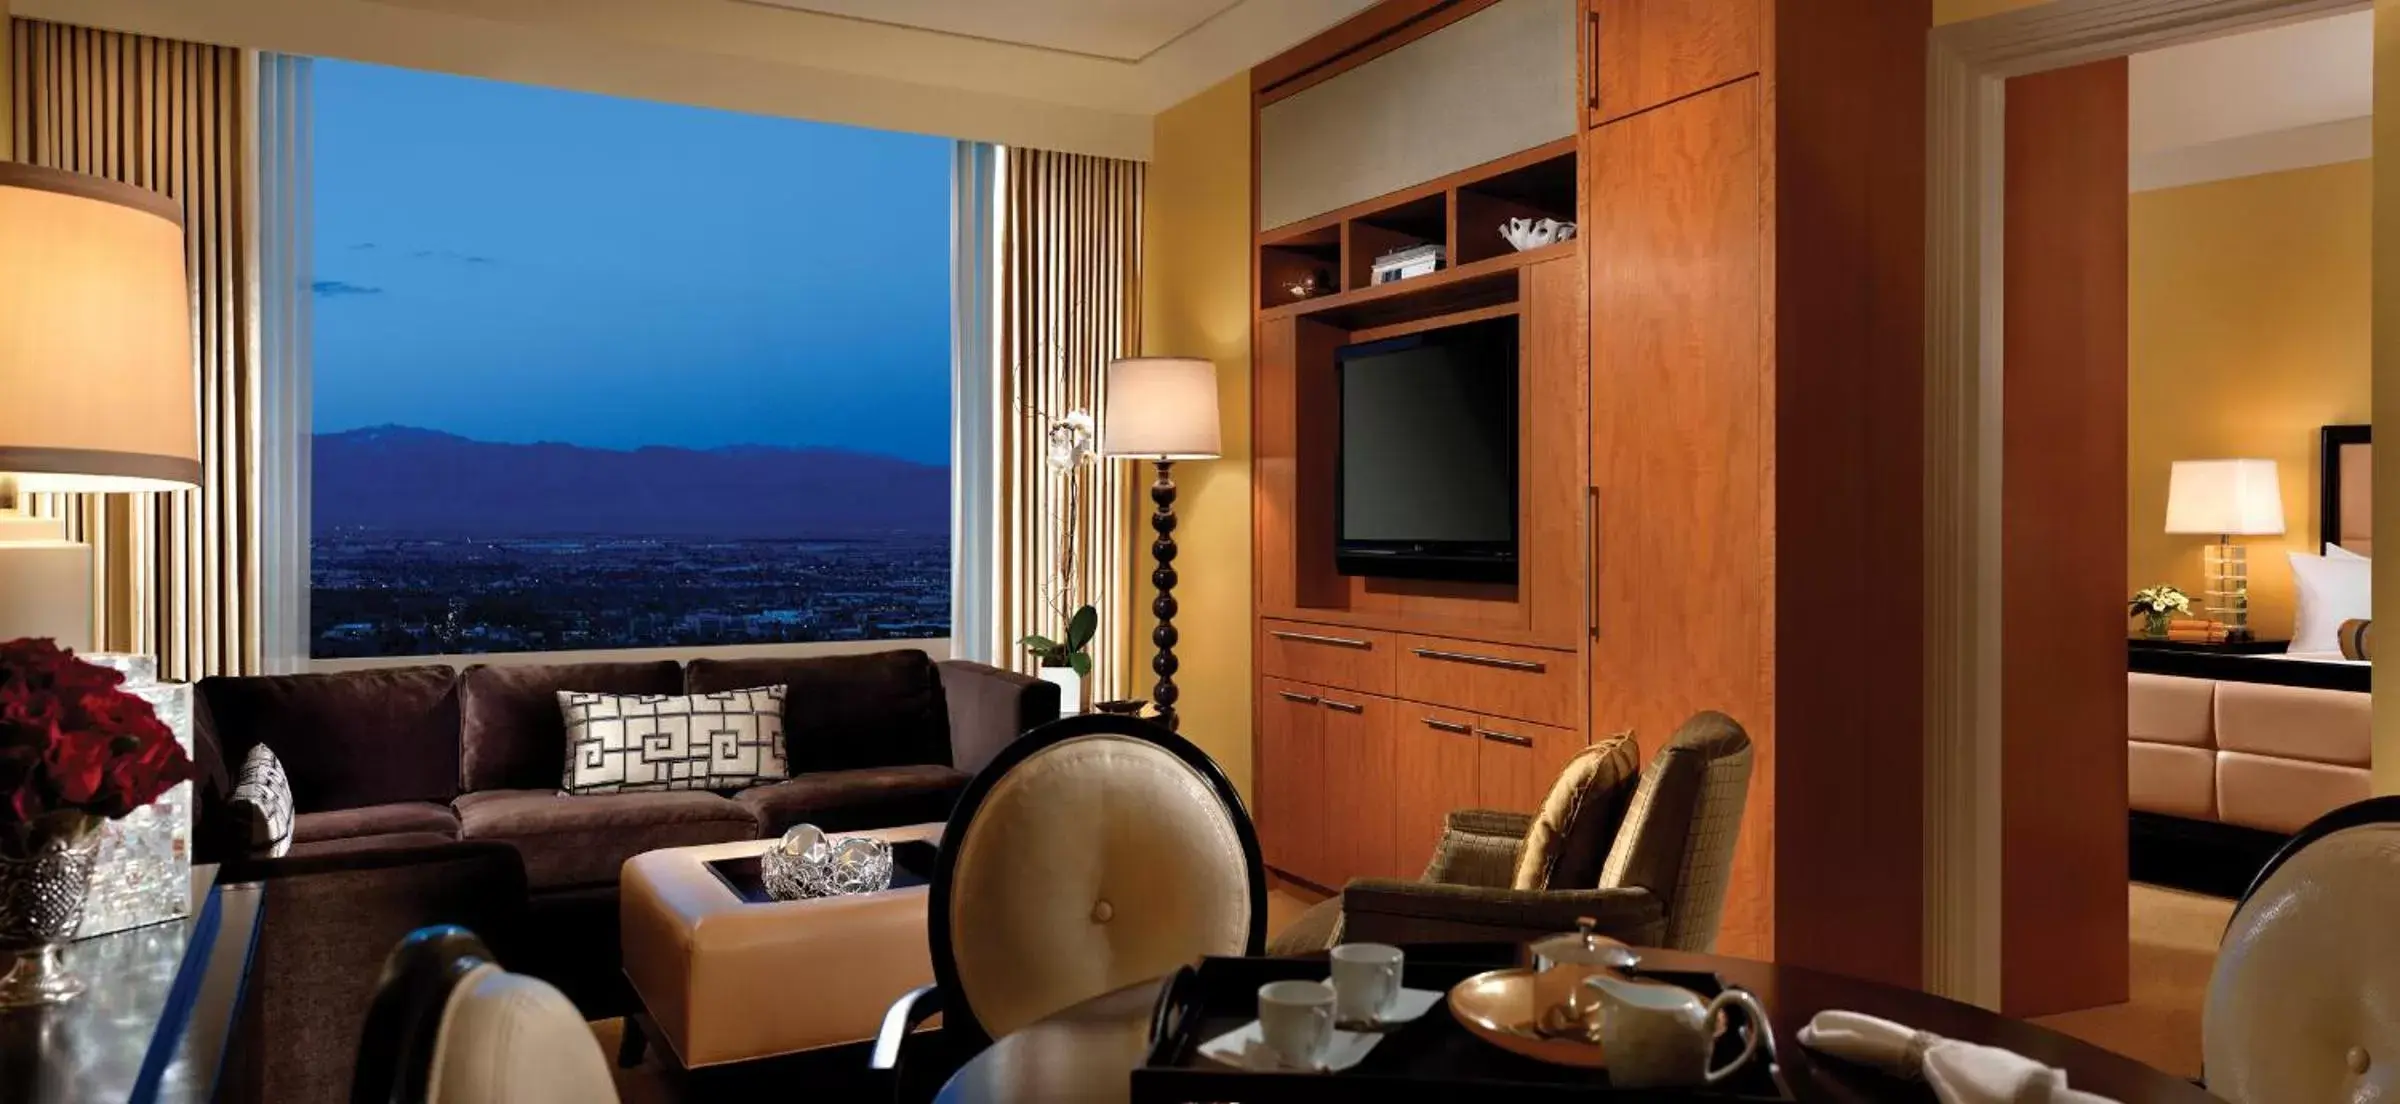 Living room in Trump International Hotel Las Vegas